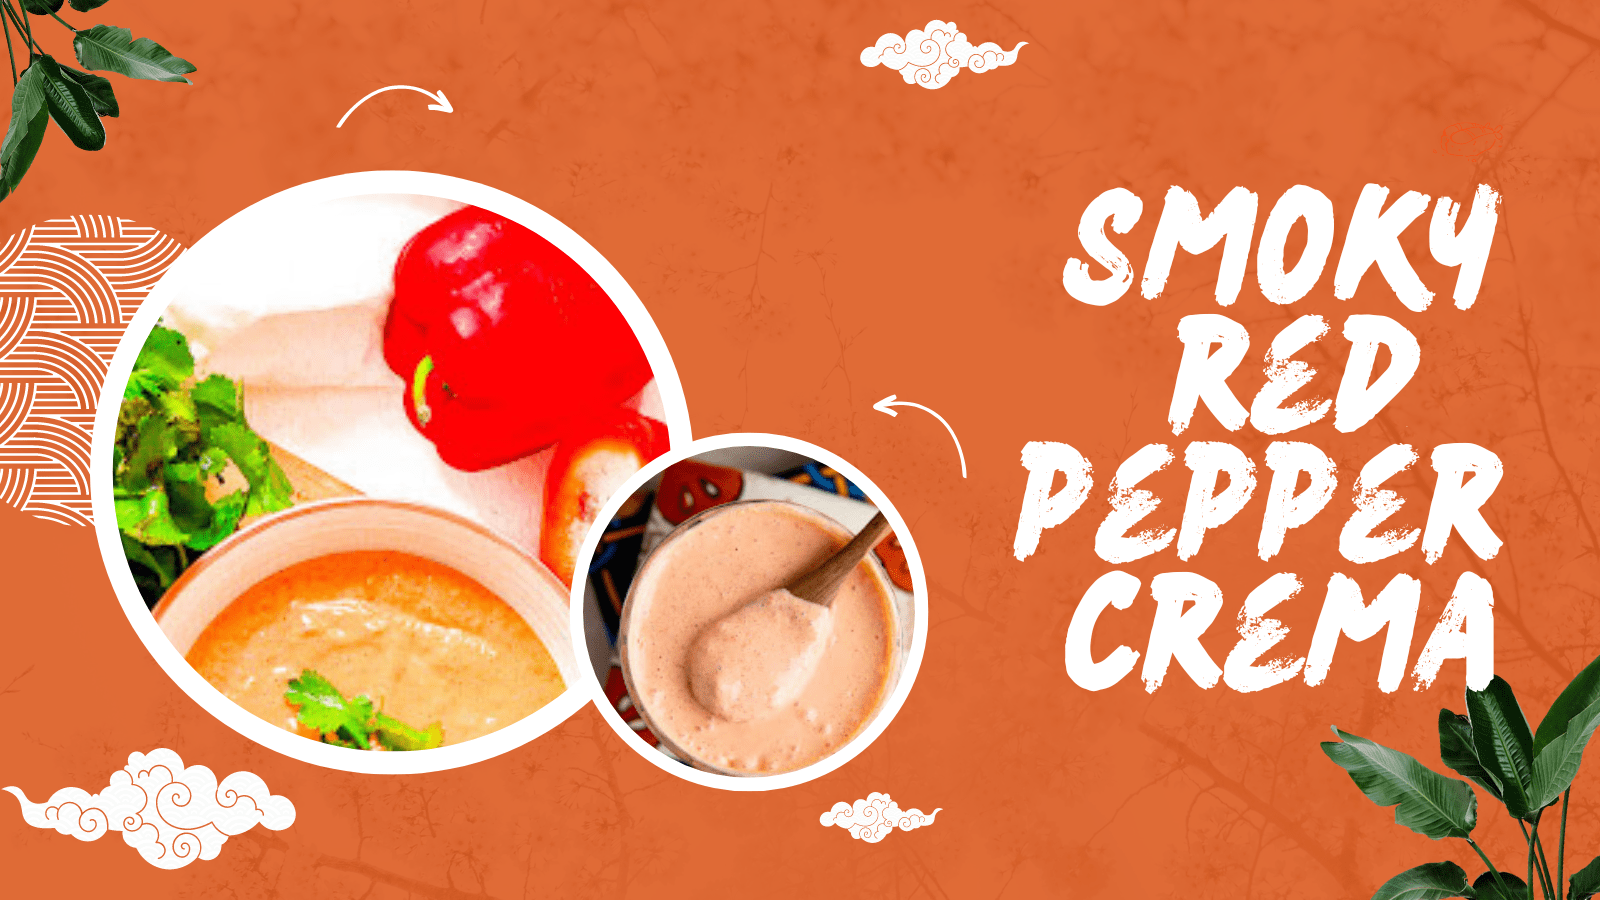 smoky red pepper crema recipe picture